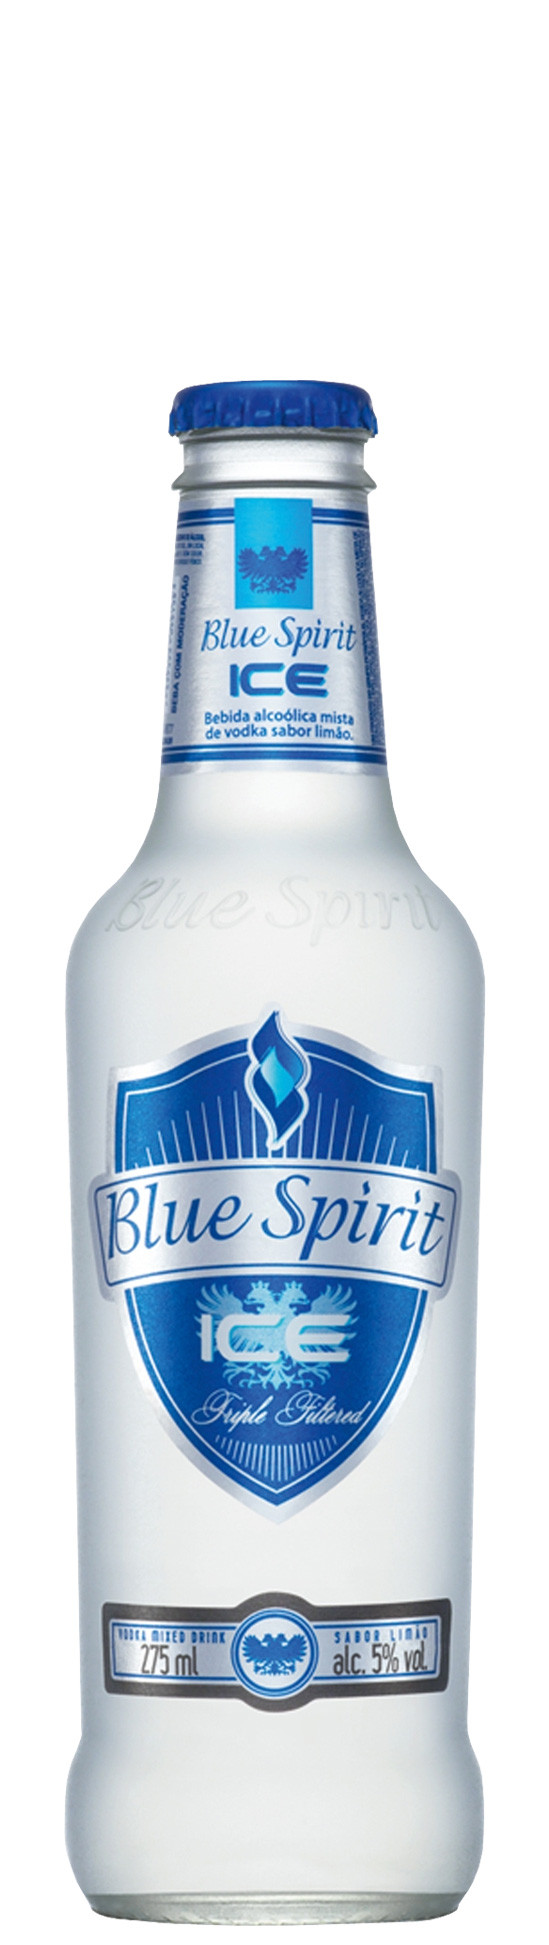 BLUE SPIRIT 12 ML